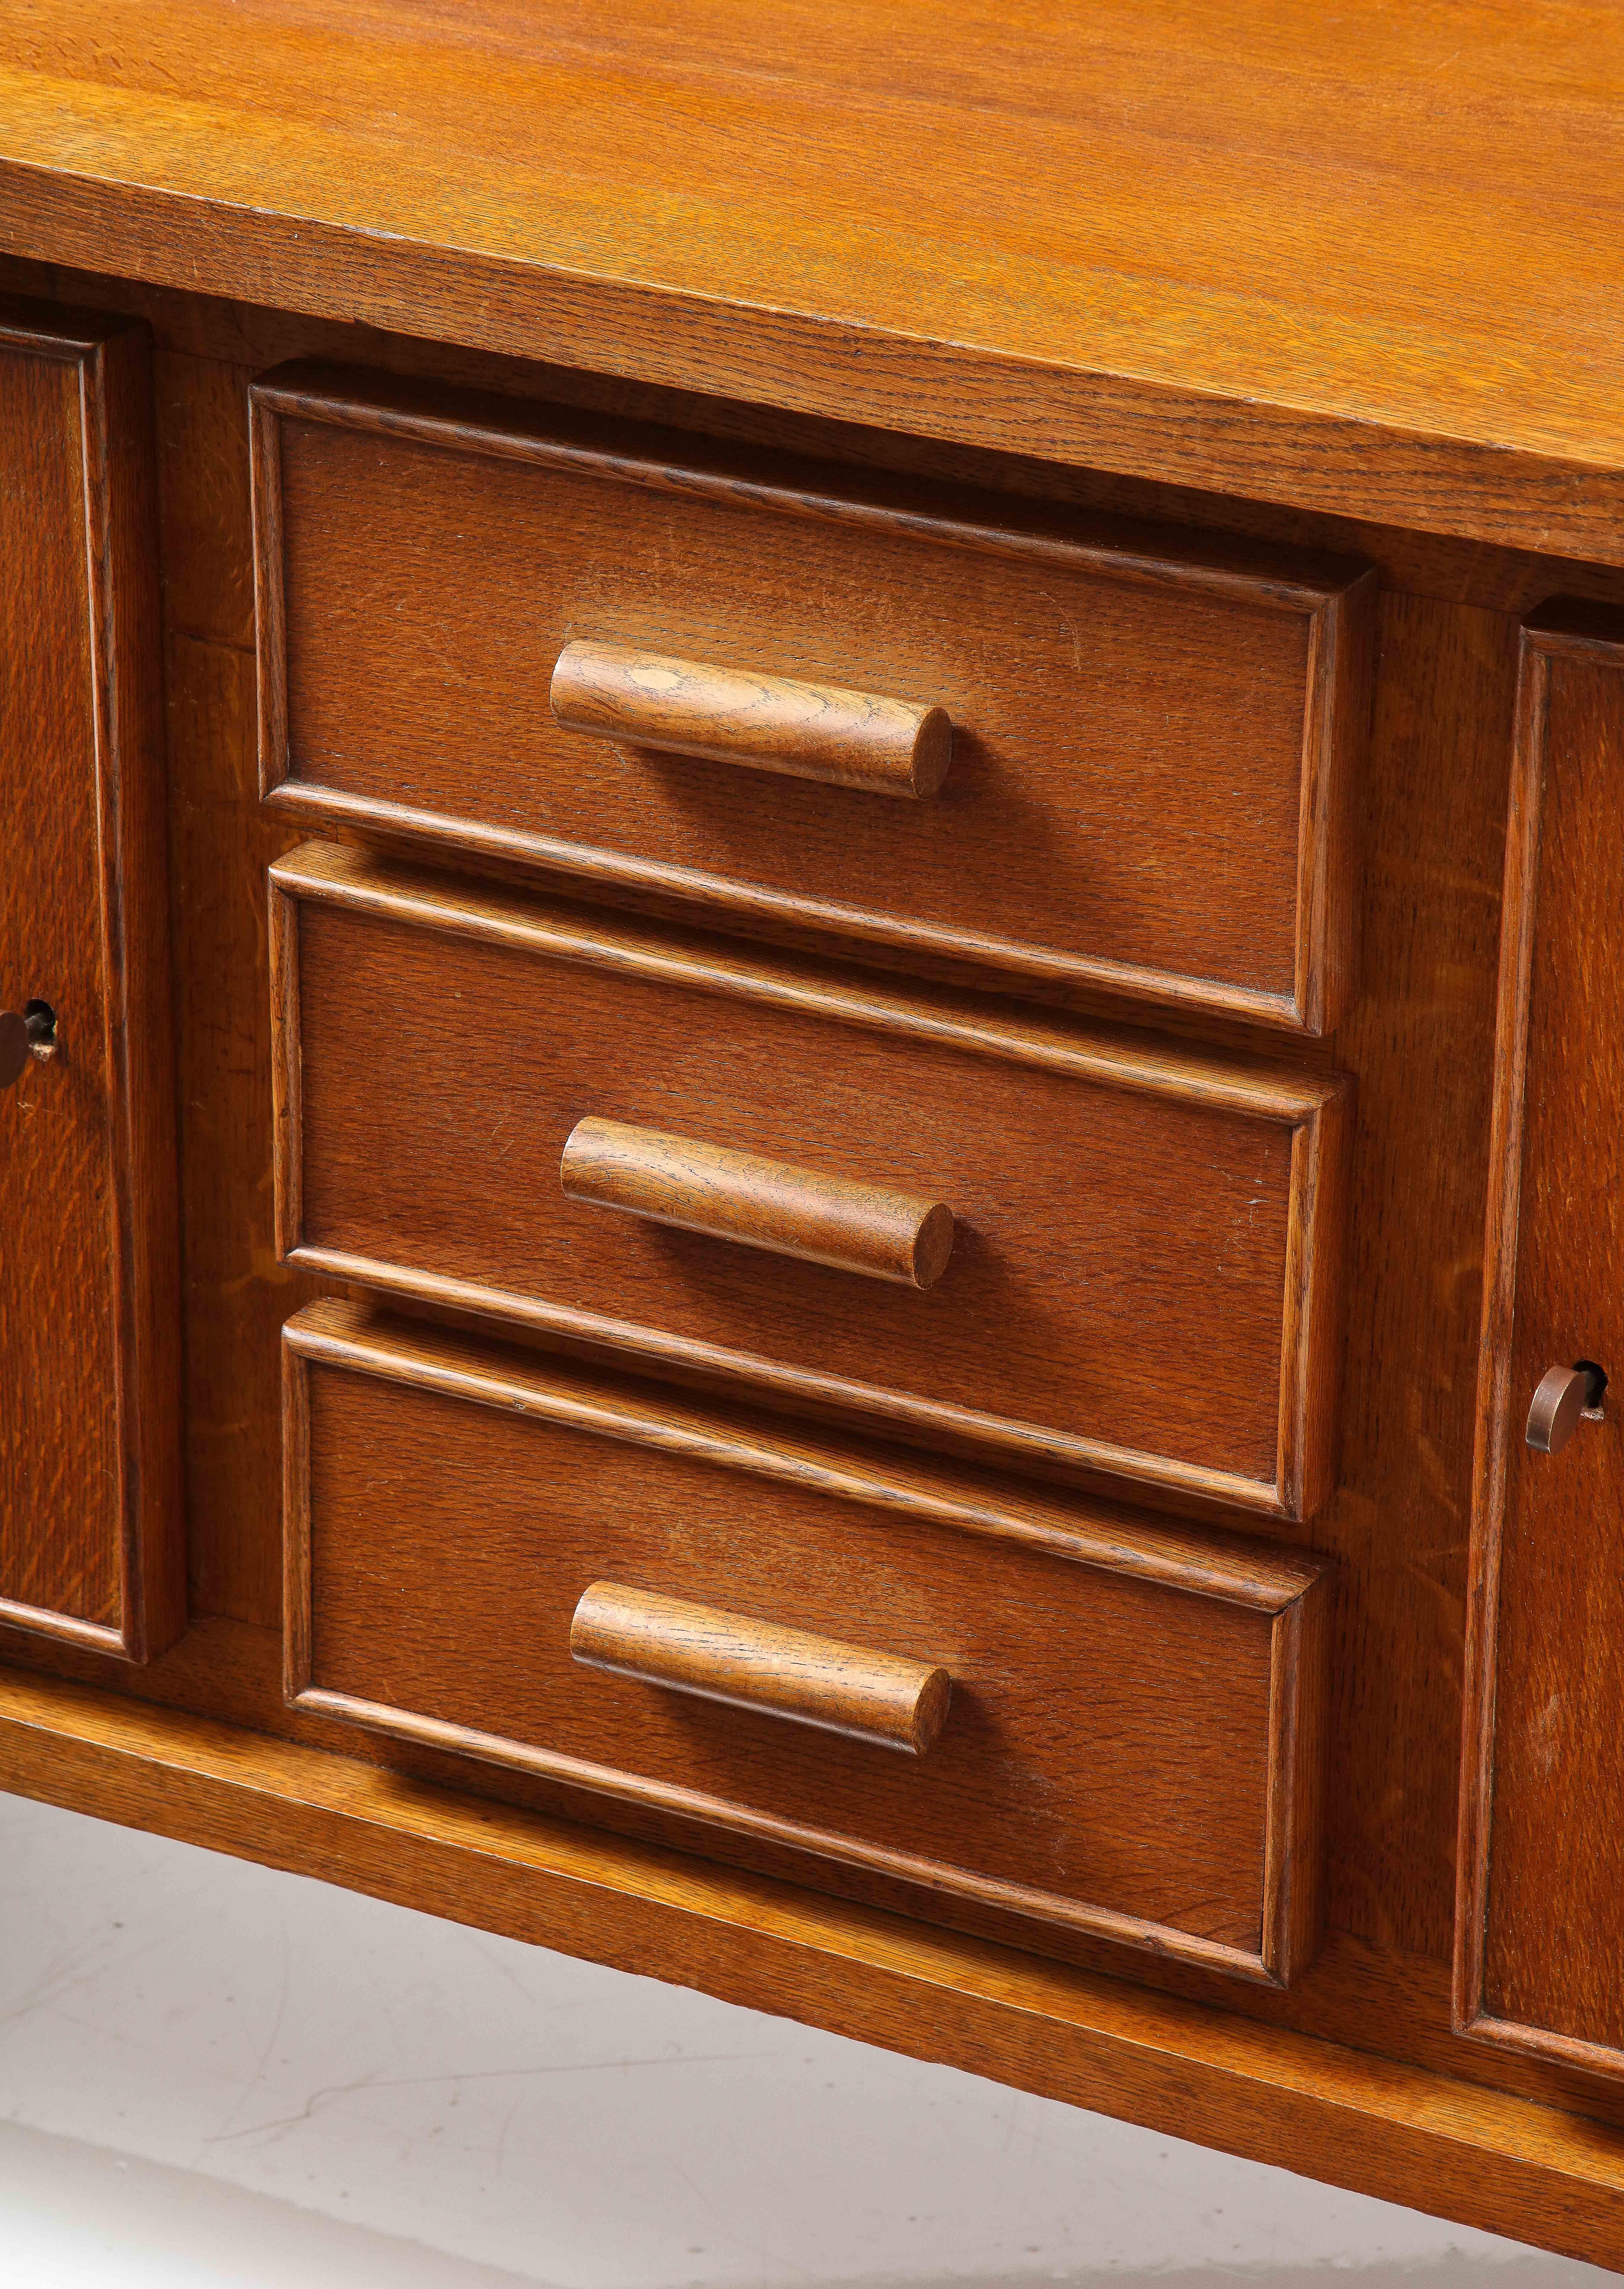 René Gabriel sideboard, rare model 202-150, First edition w wooden handle, France, 1948
Natural oak finish, interiors shelves.
Oak, original keys, wonderful original patina, bead detail & handles.